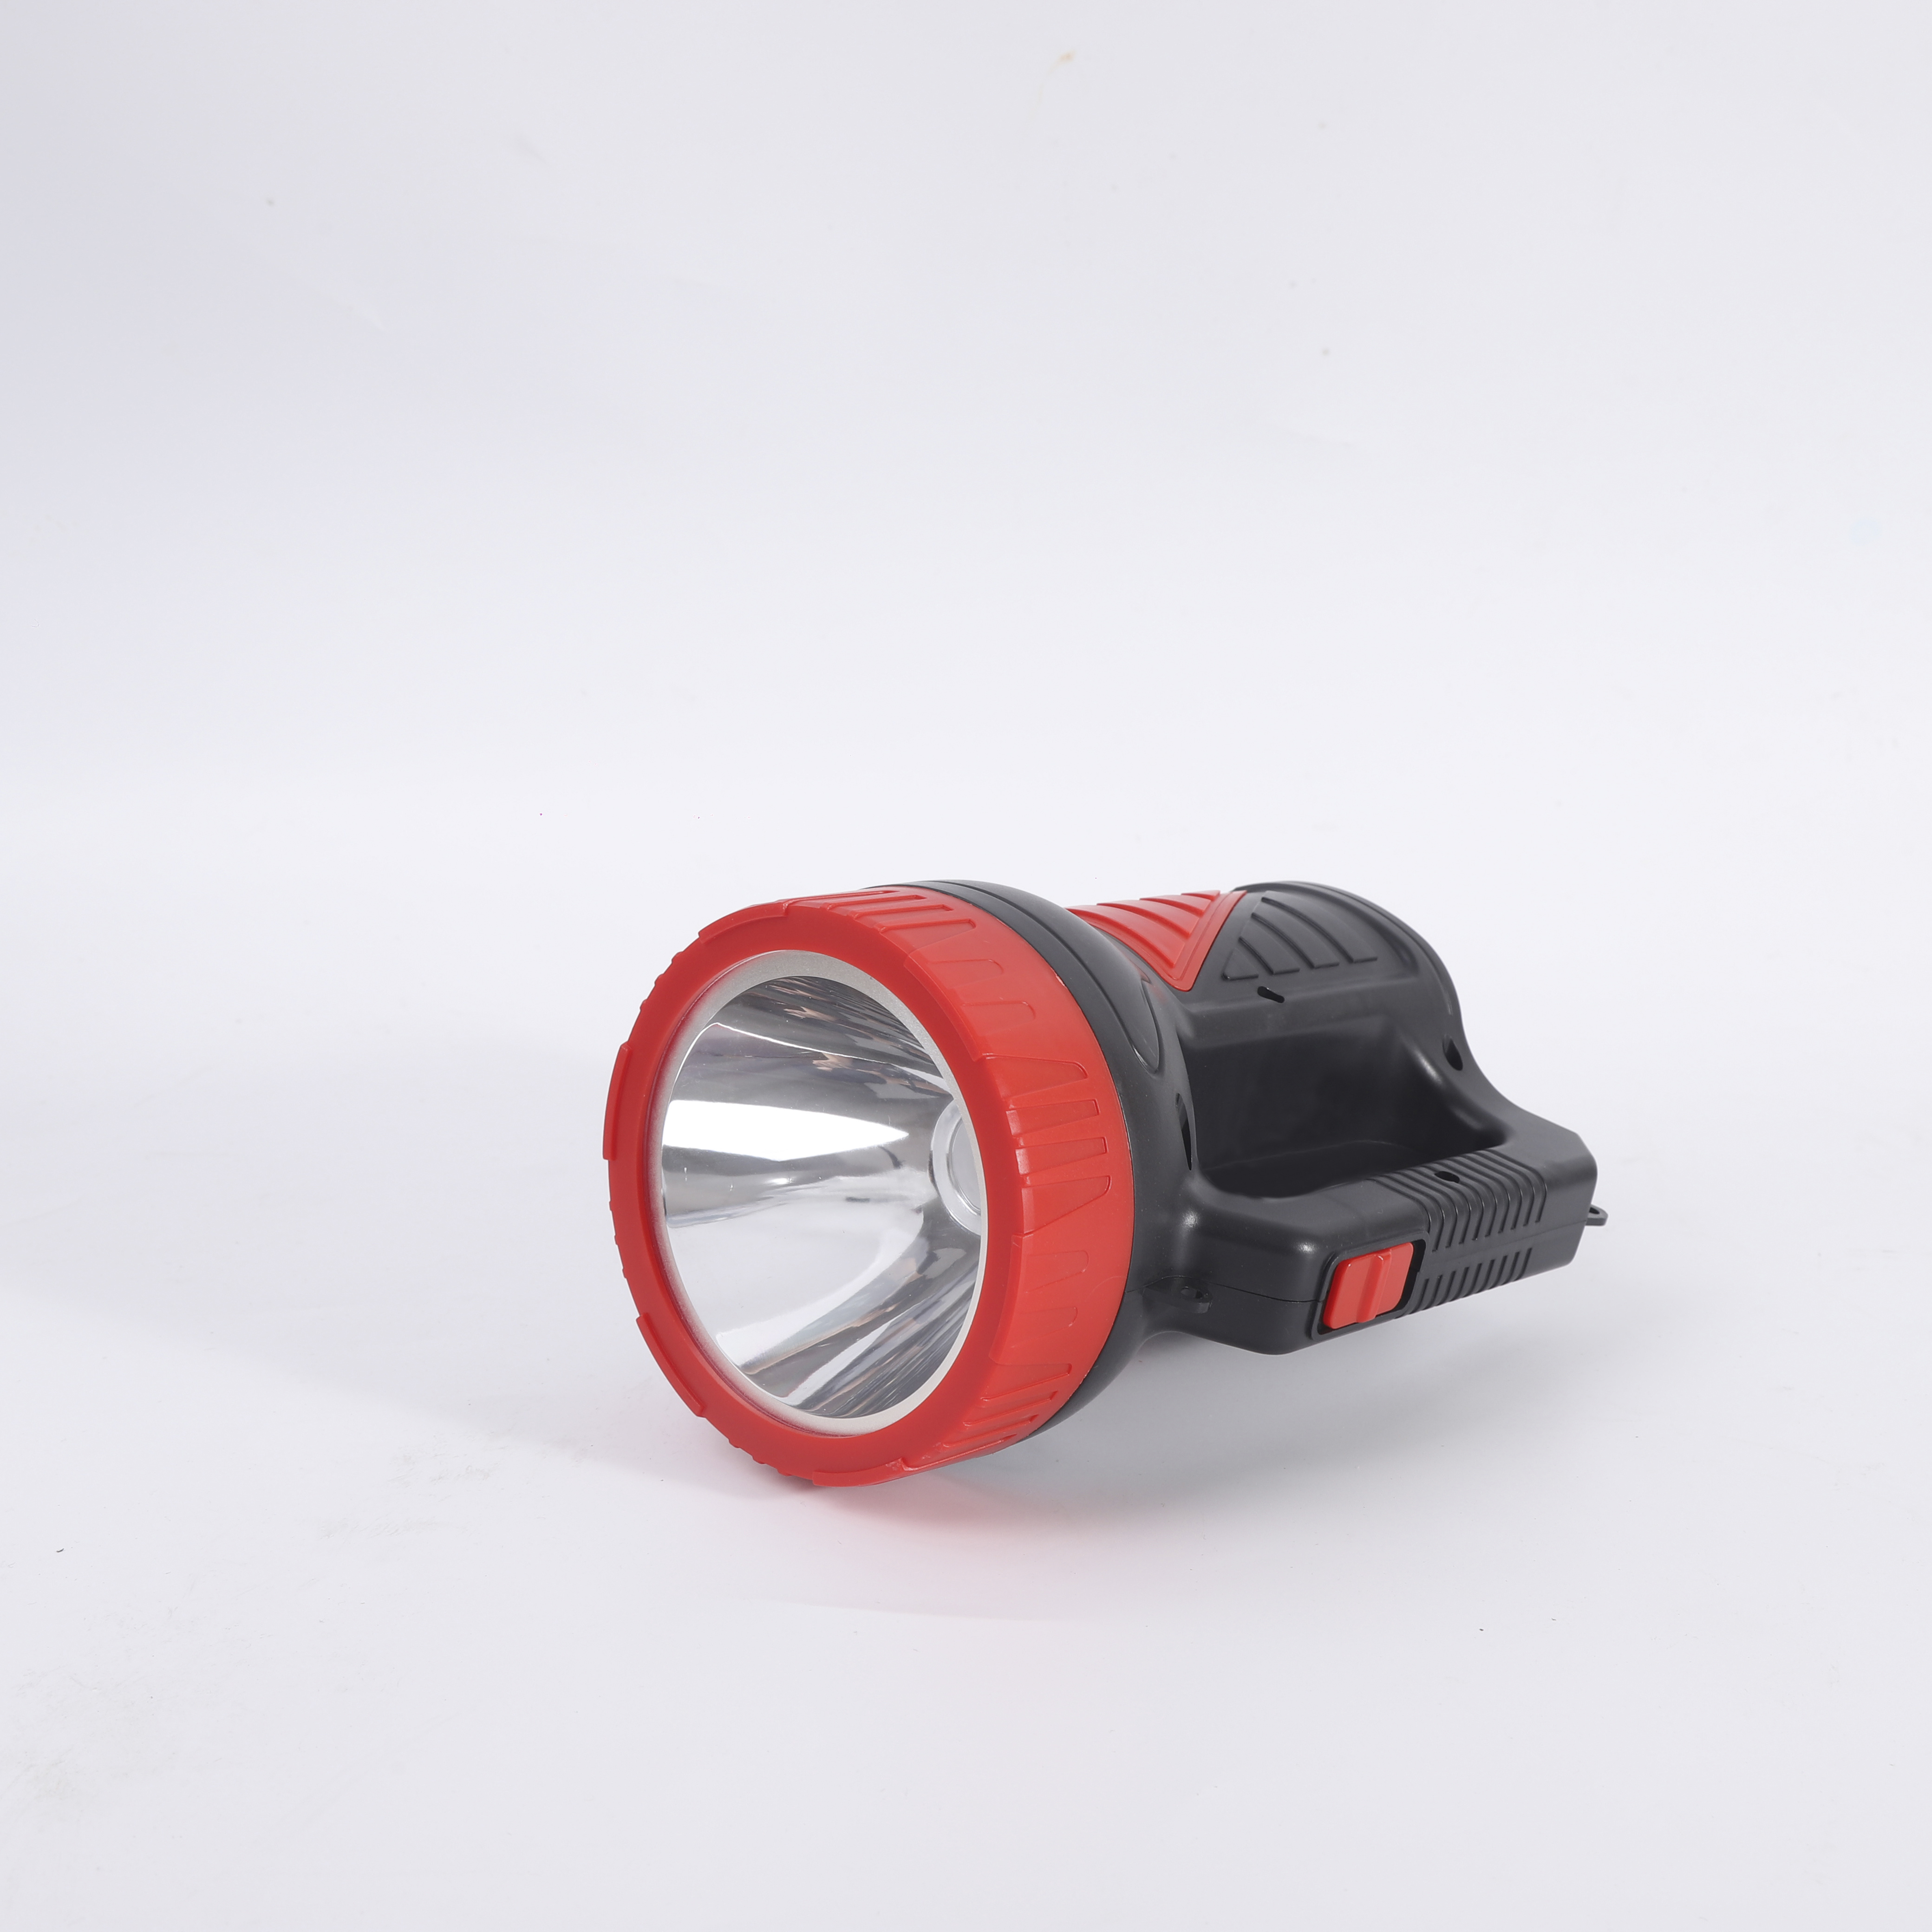 Ligera de mano de alta potencia recargable Luz LED de alta potencia